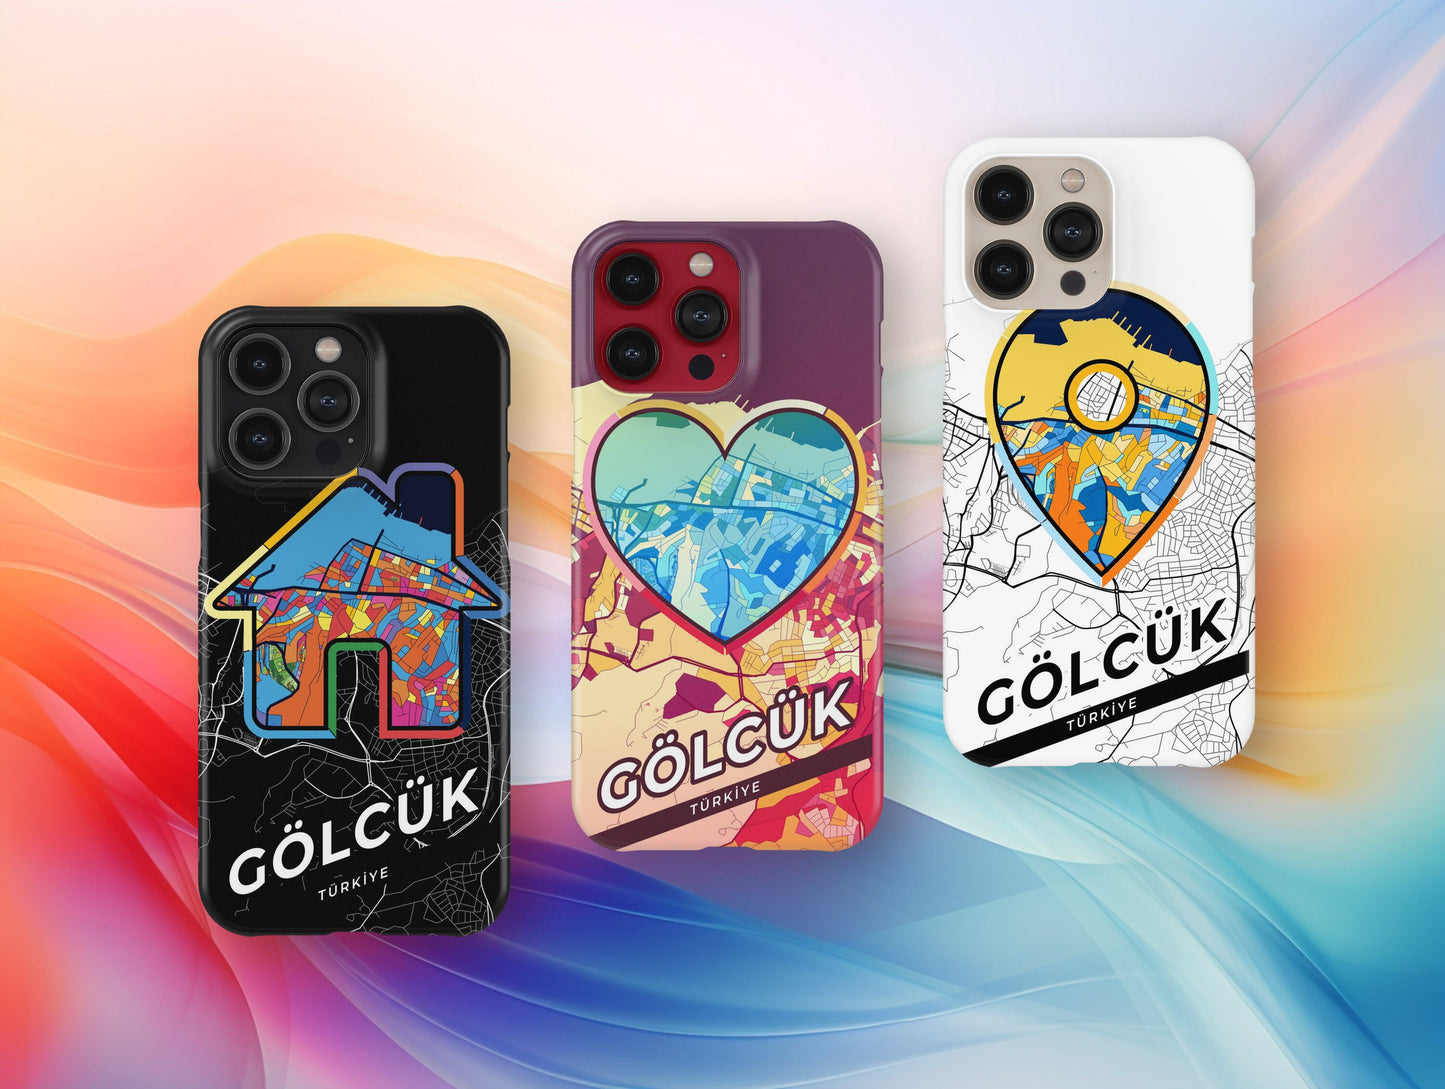 Gölcük Turkey slim phone case with colorful icon. Birthday, wedding or housewarming gift. Couple match cases.